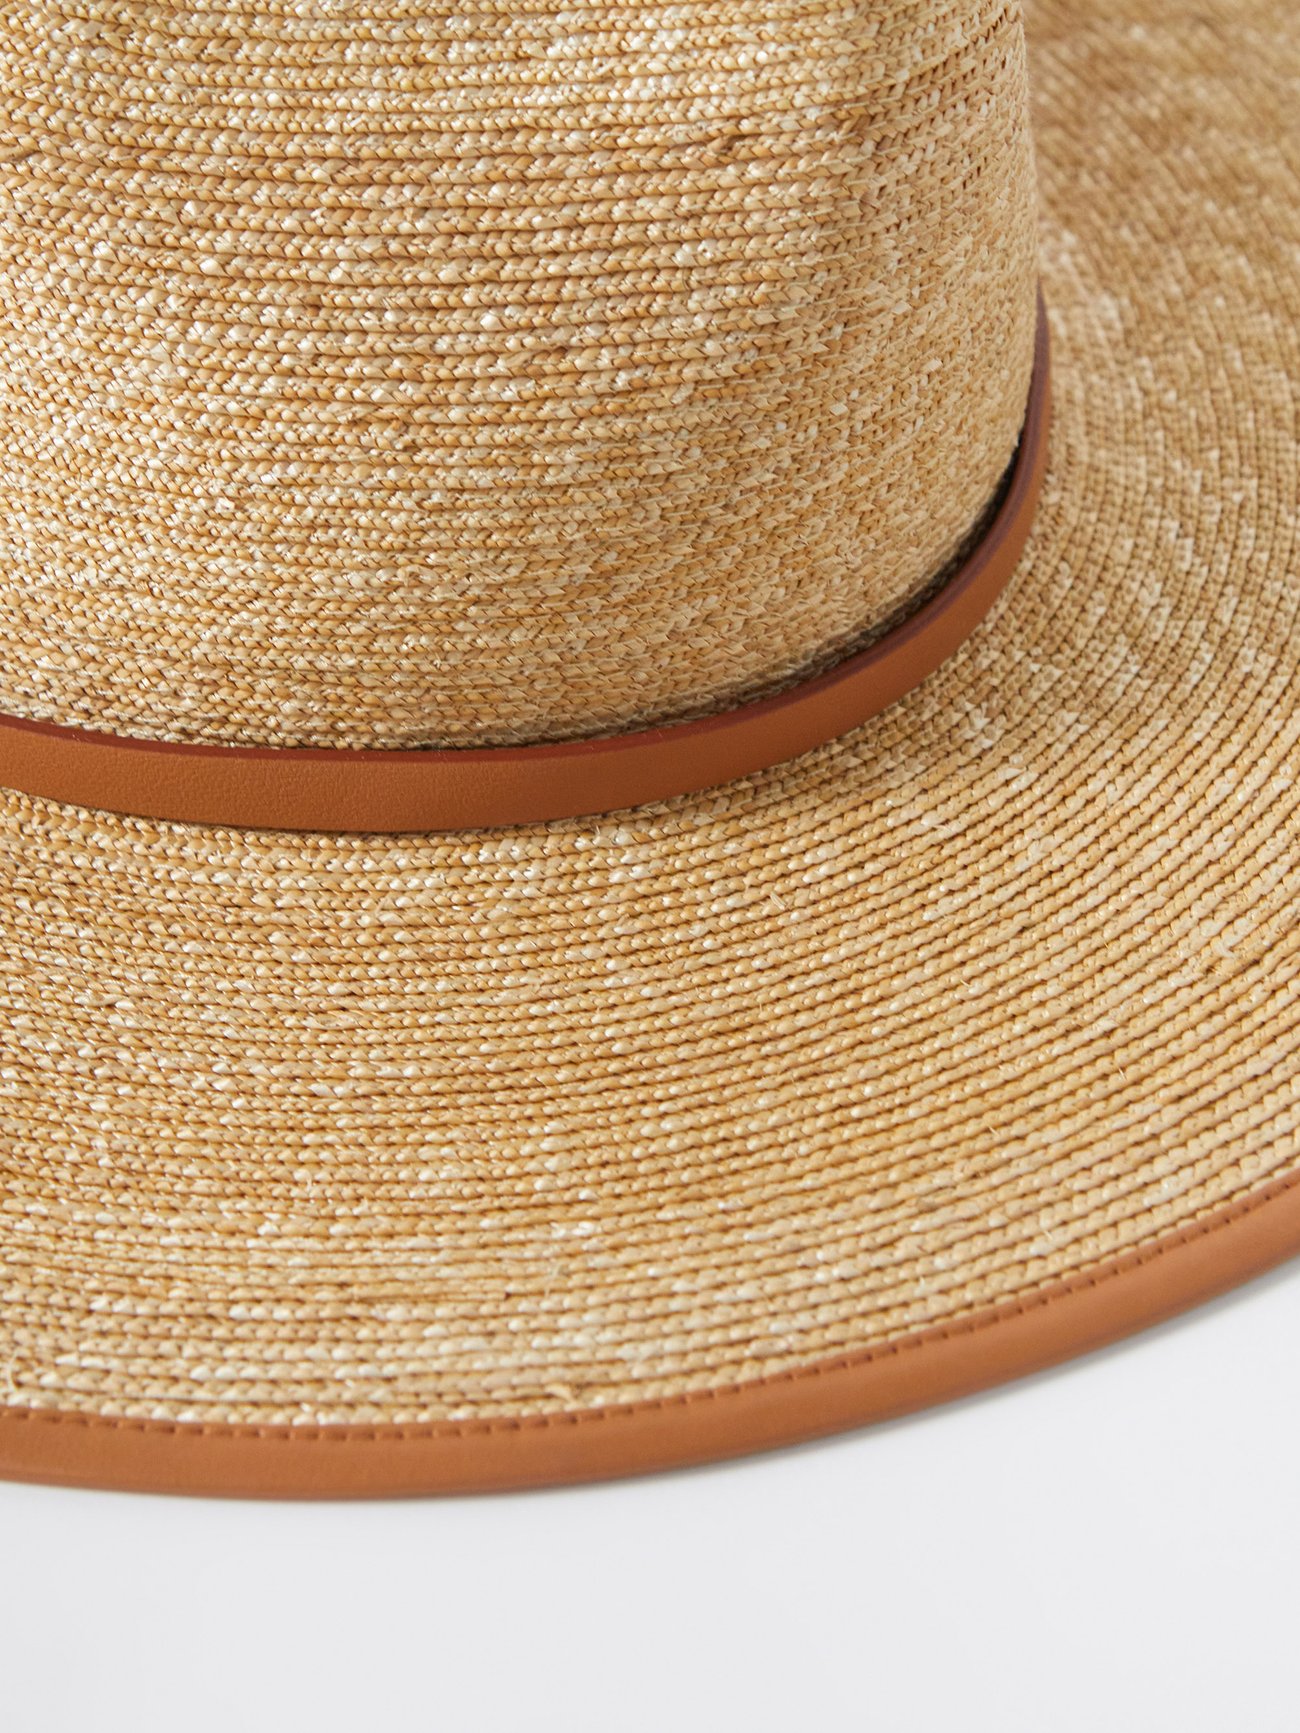 VLogo leather-trimmed straw hat